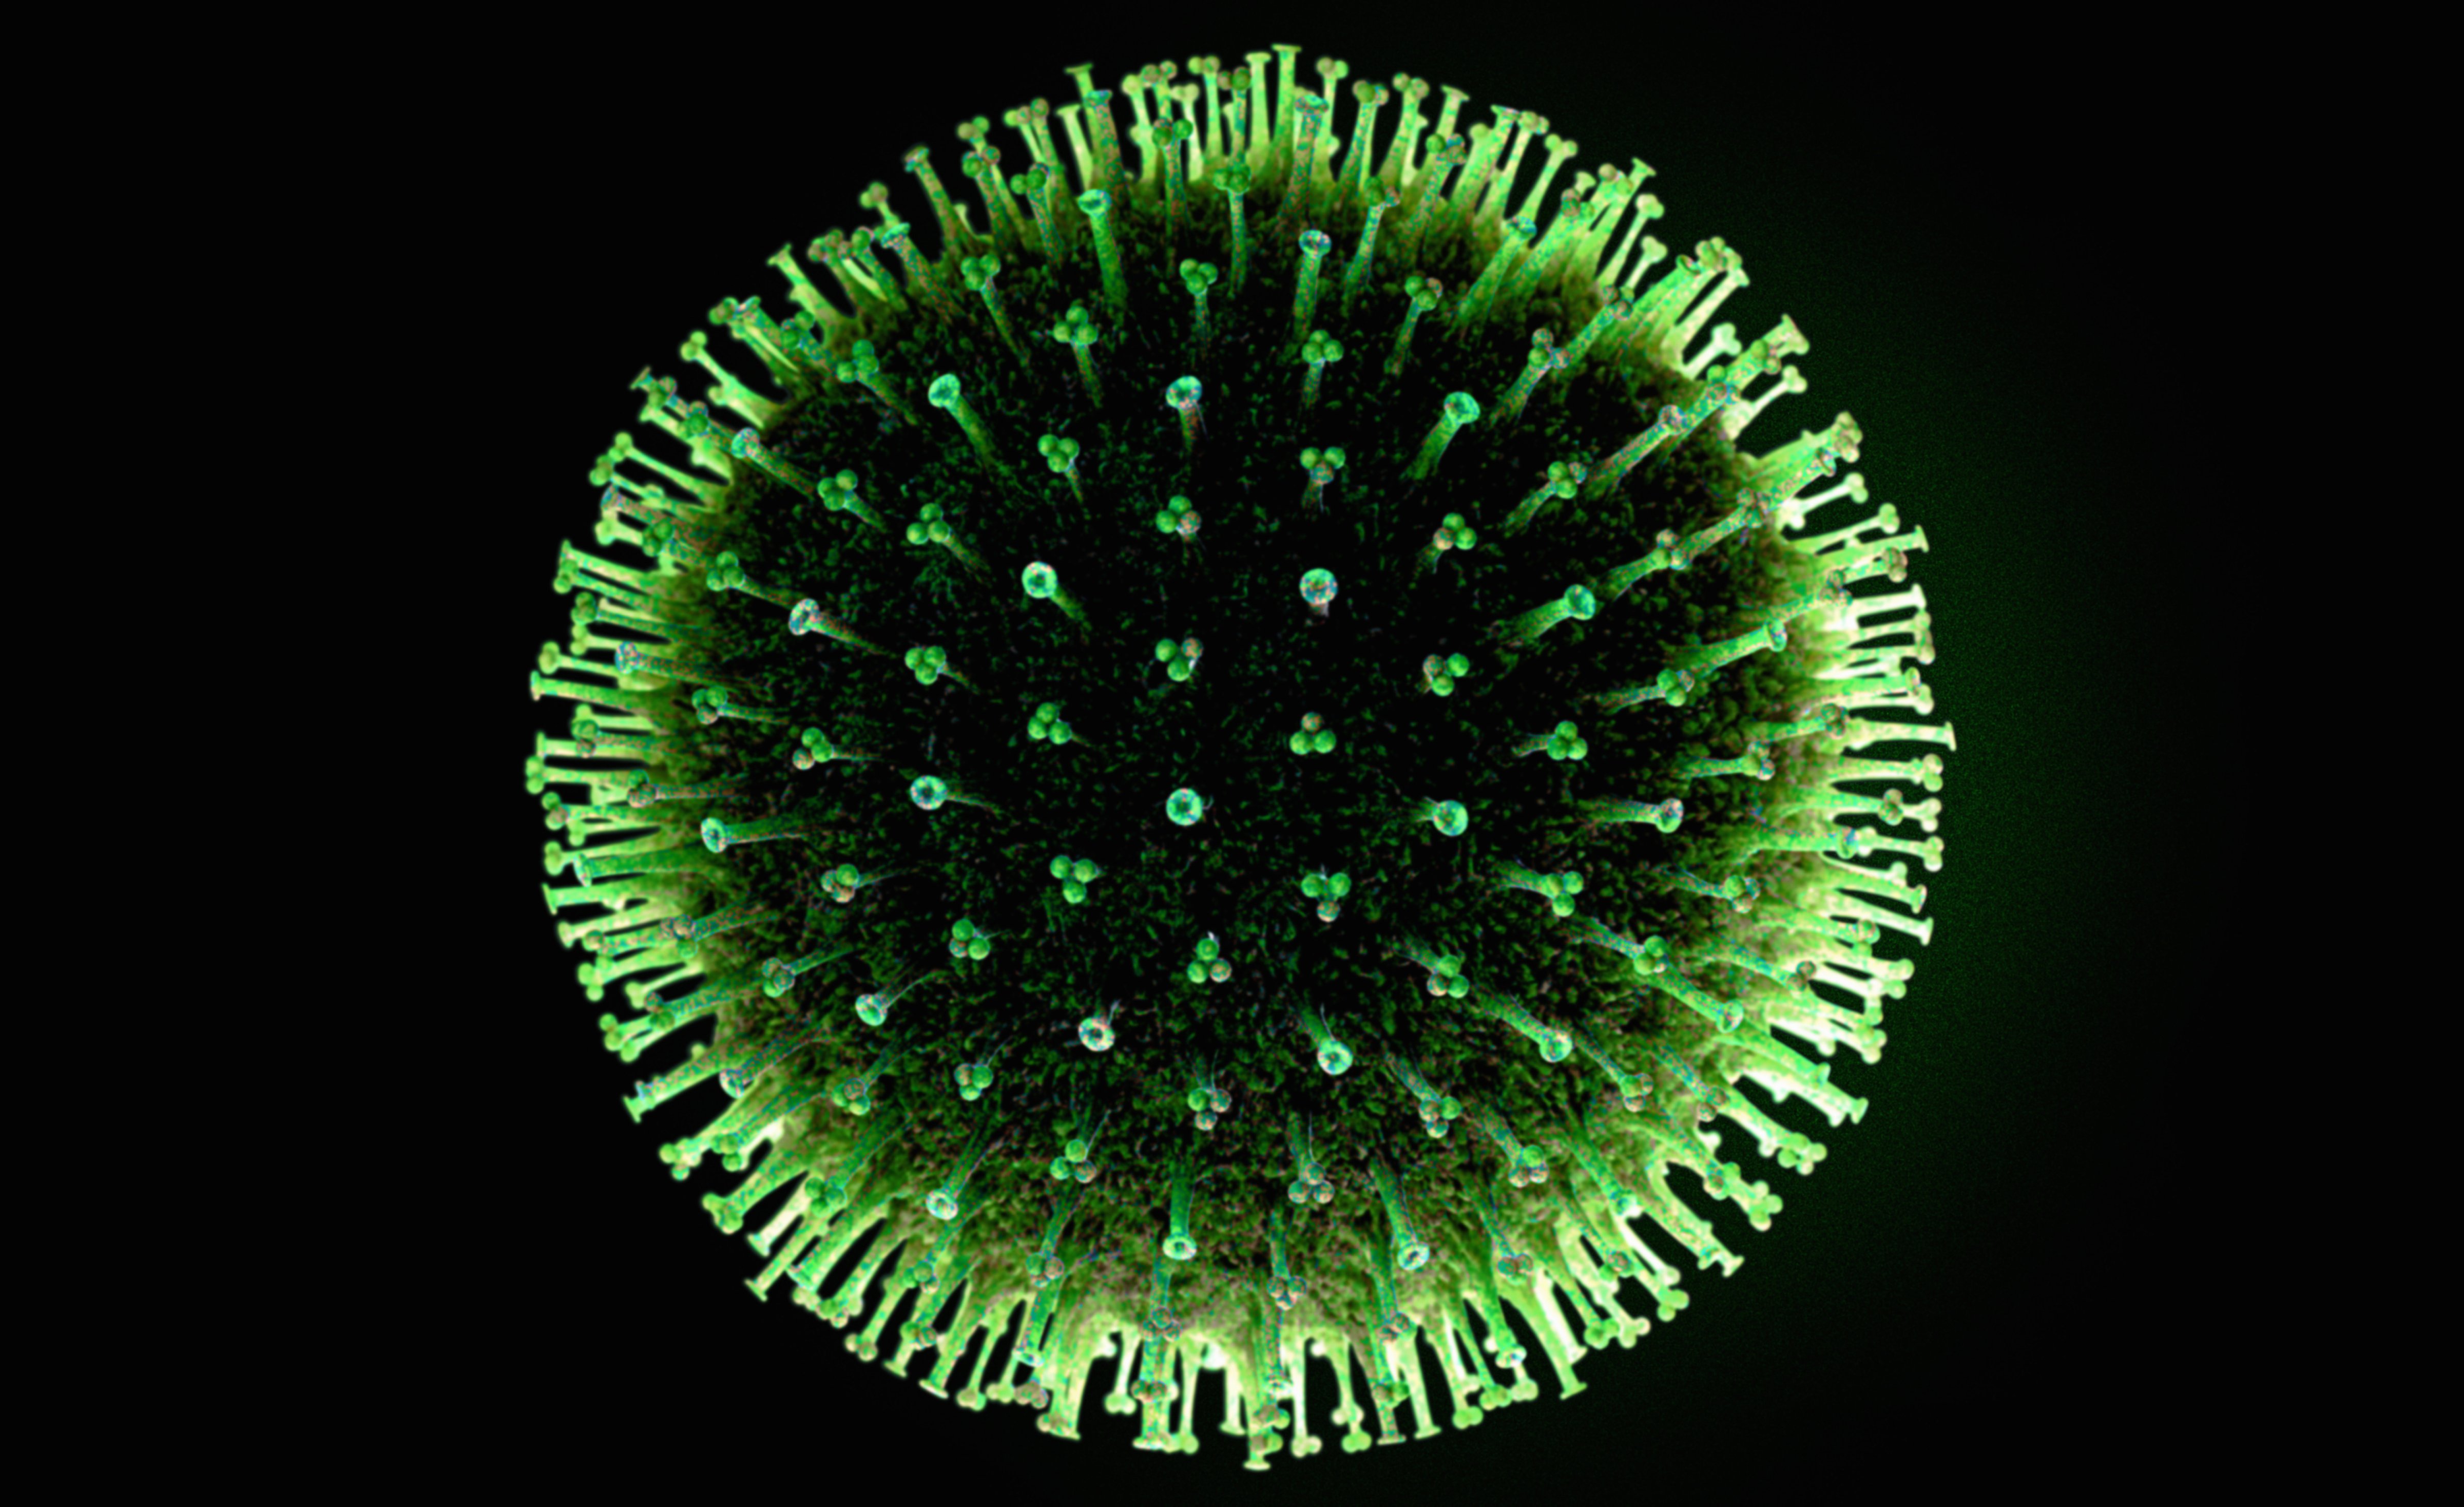 Think this flu virus looks nasty? The giant virus is 20,000 times bigger